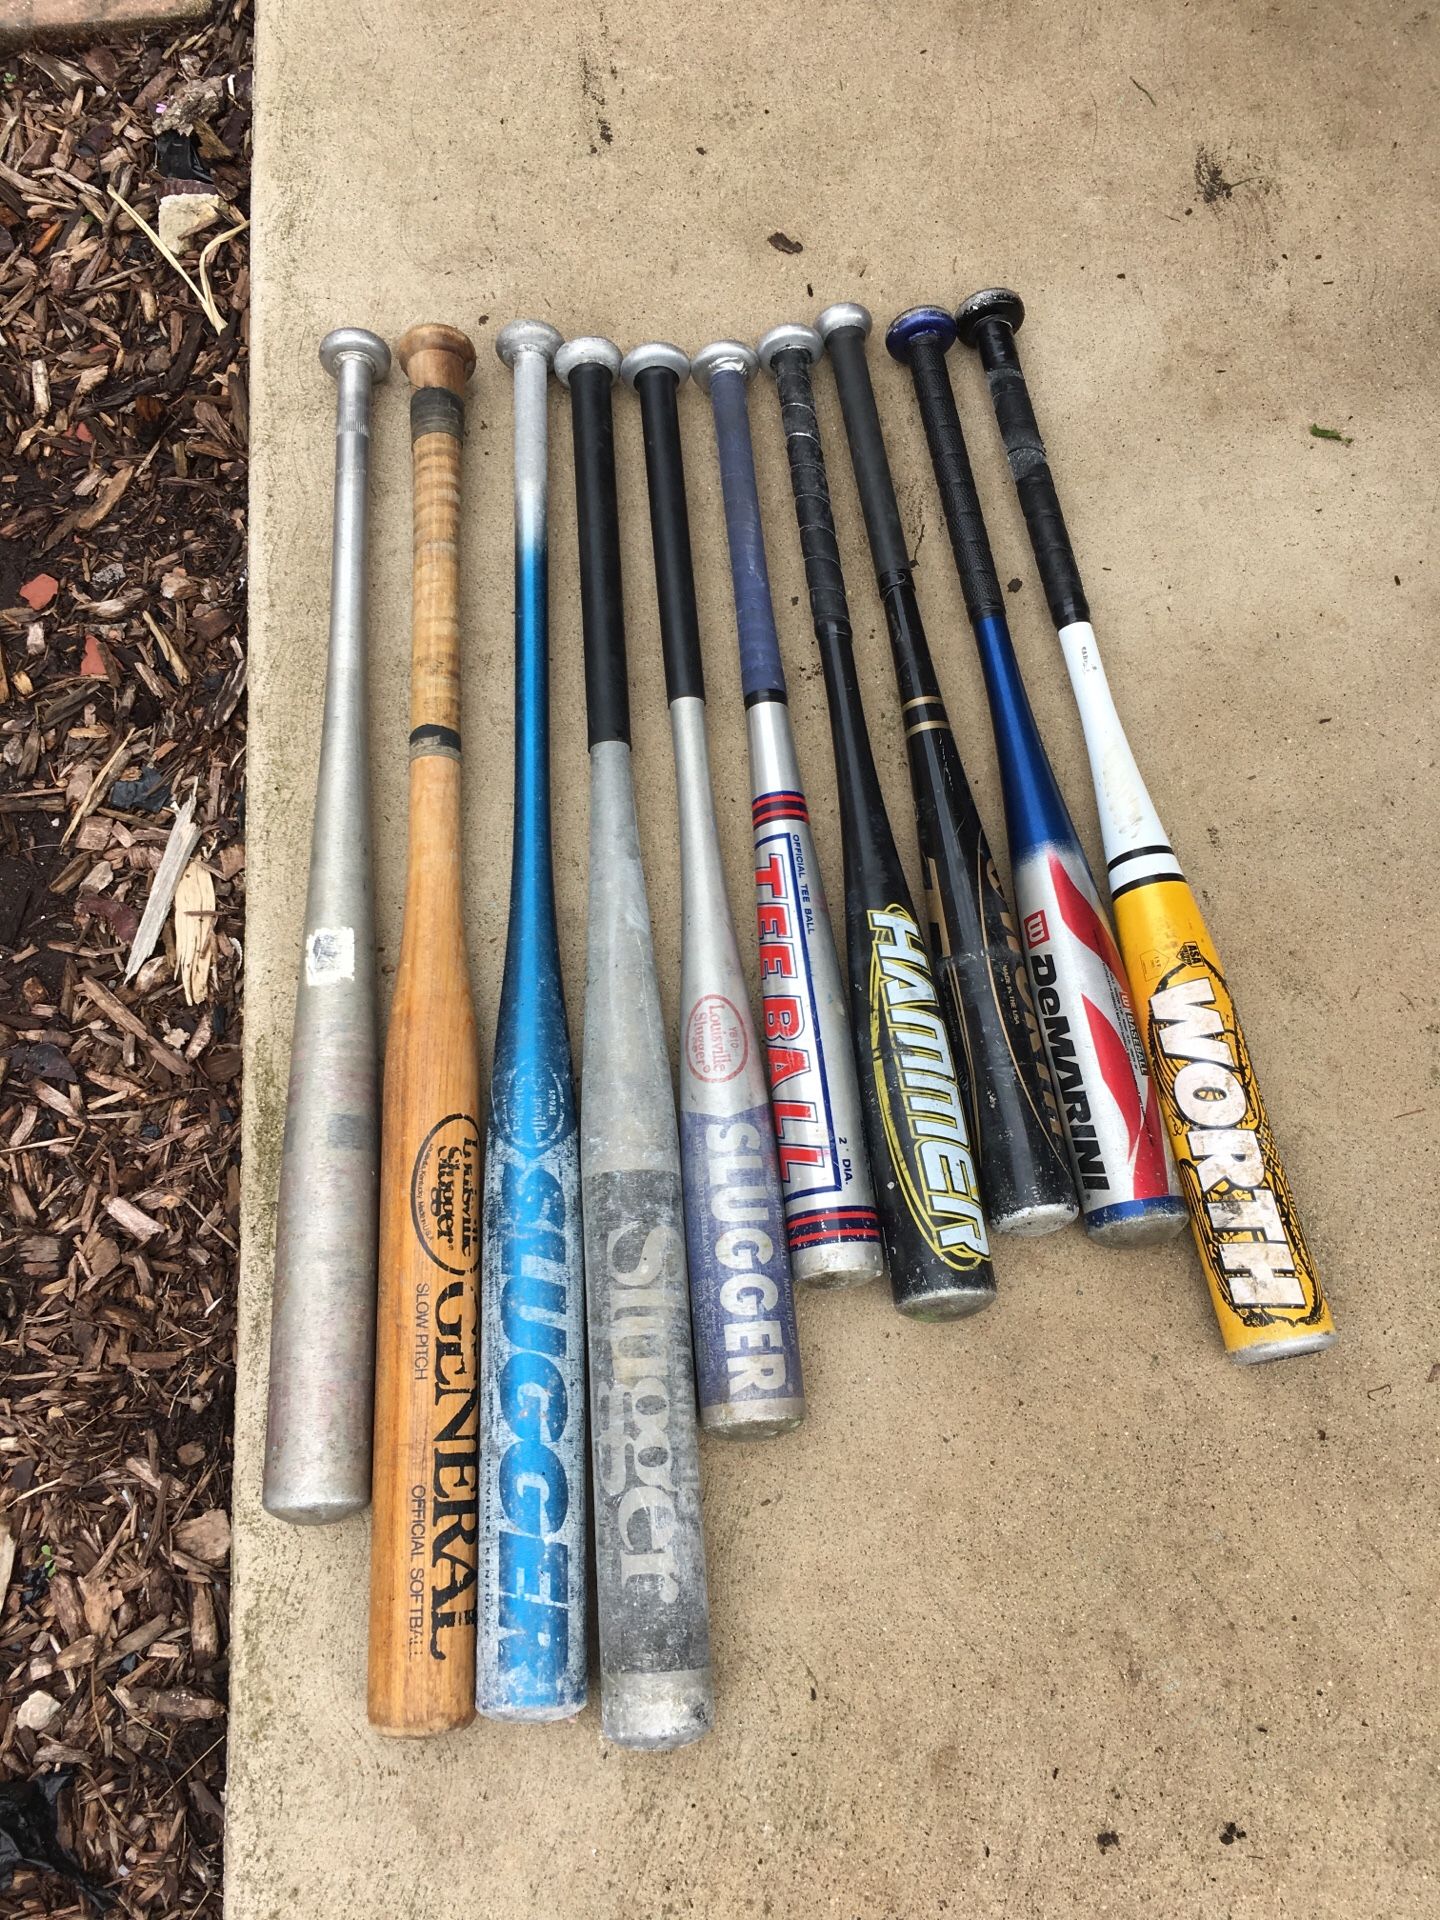 10 bats softball/baseball